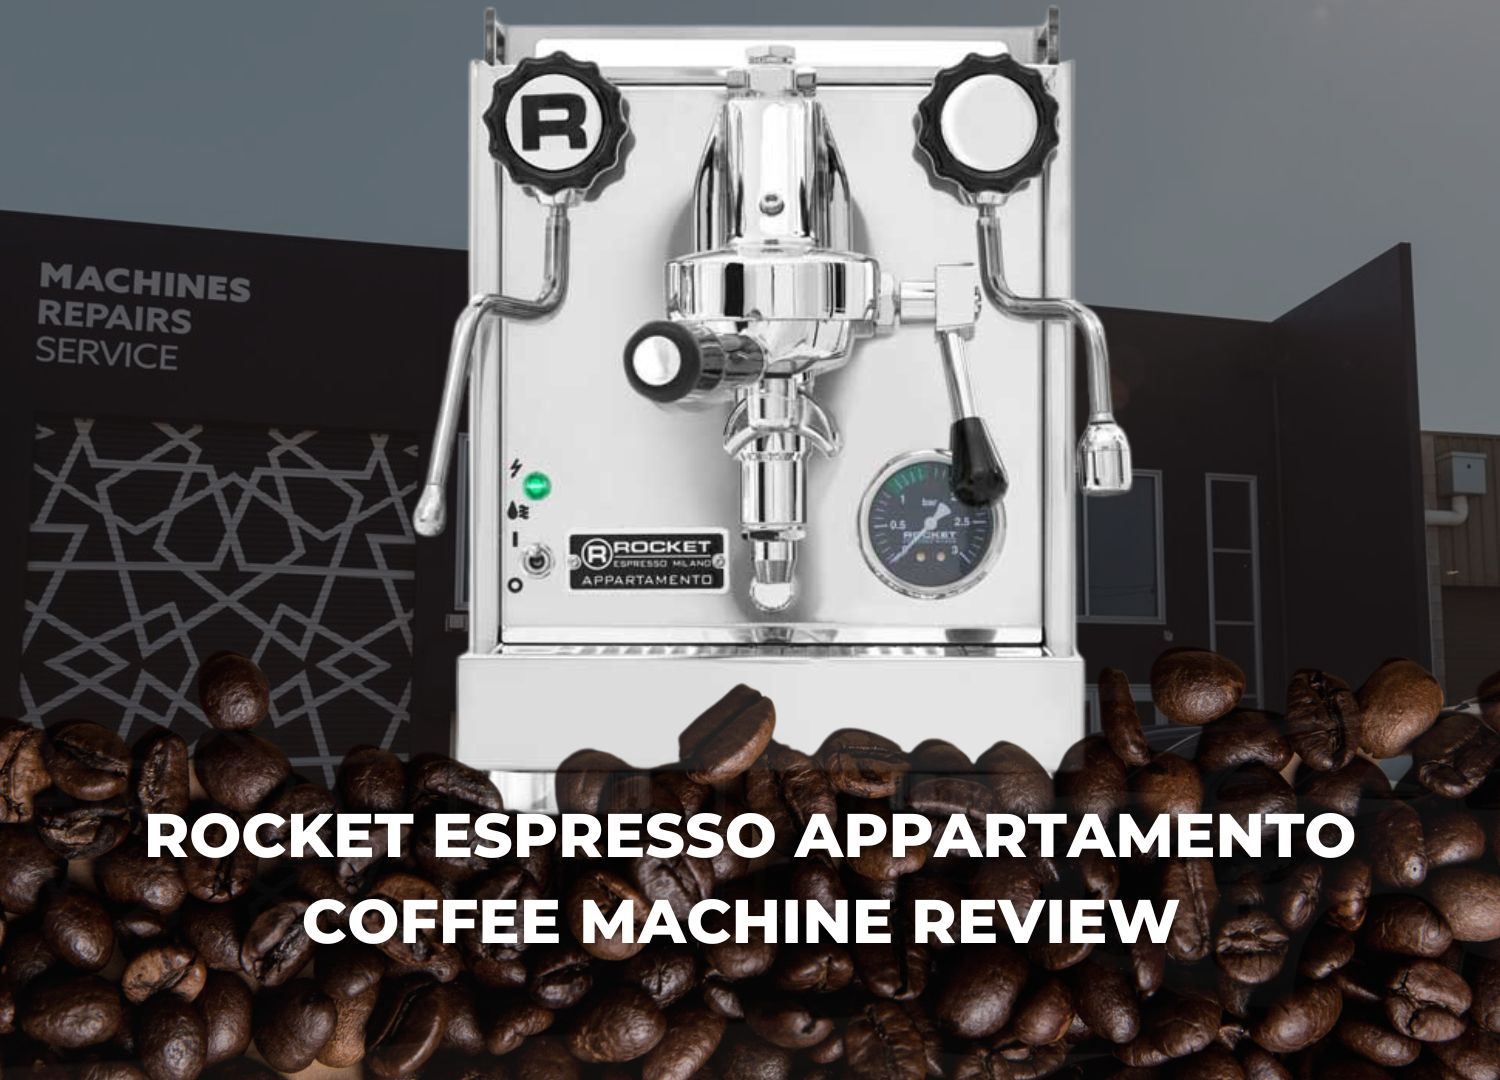 Rocket Espresso Appartamento coffee machine placed infront of the Coffee Complex shop.